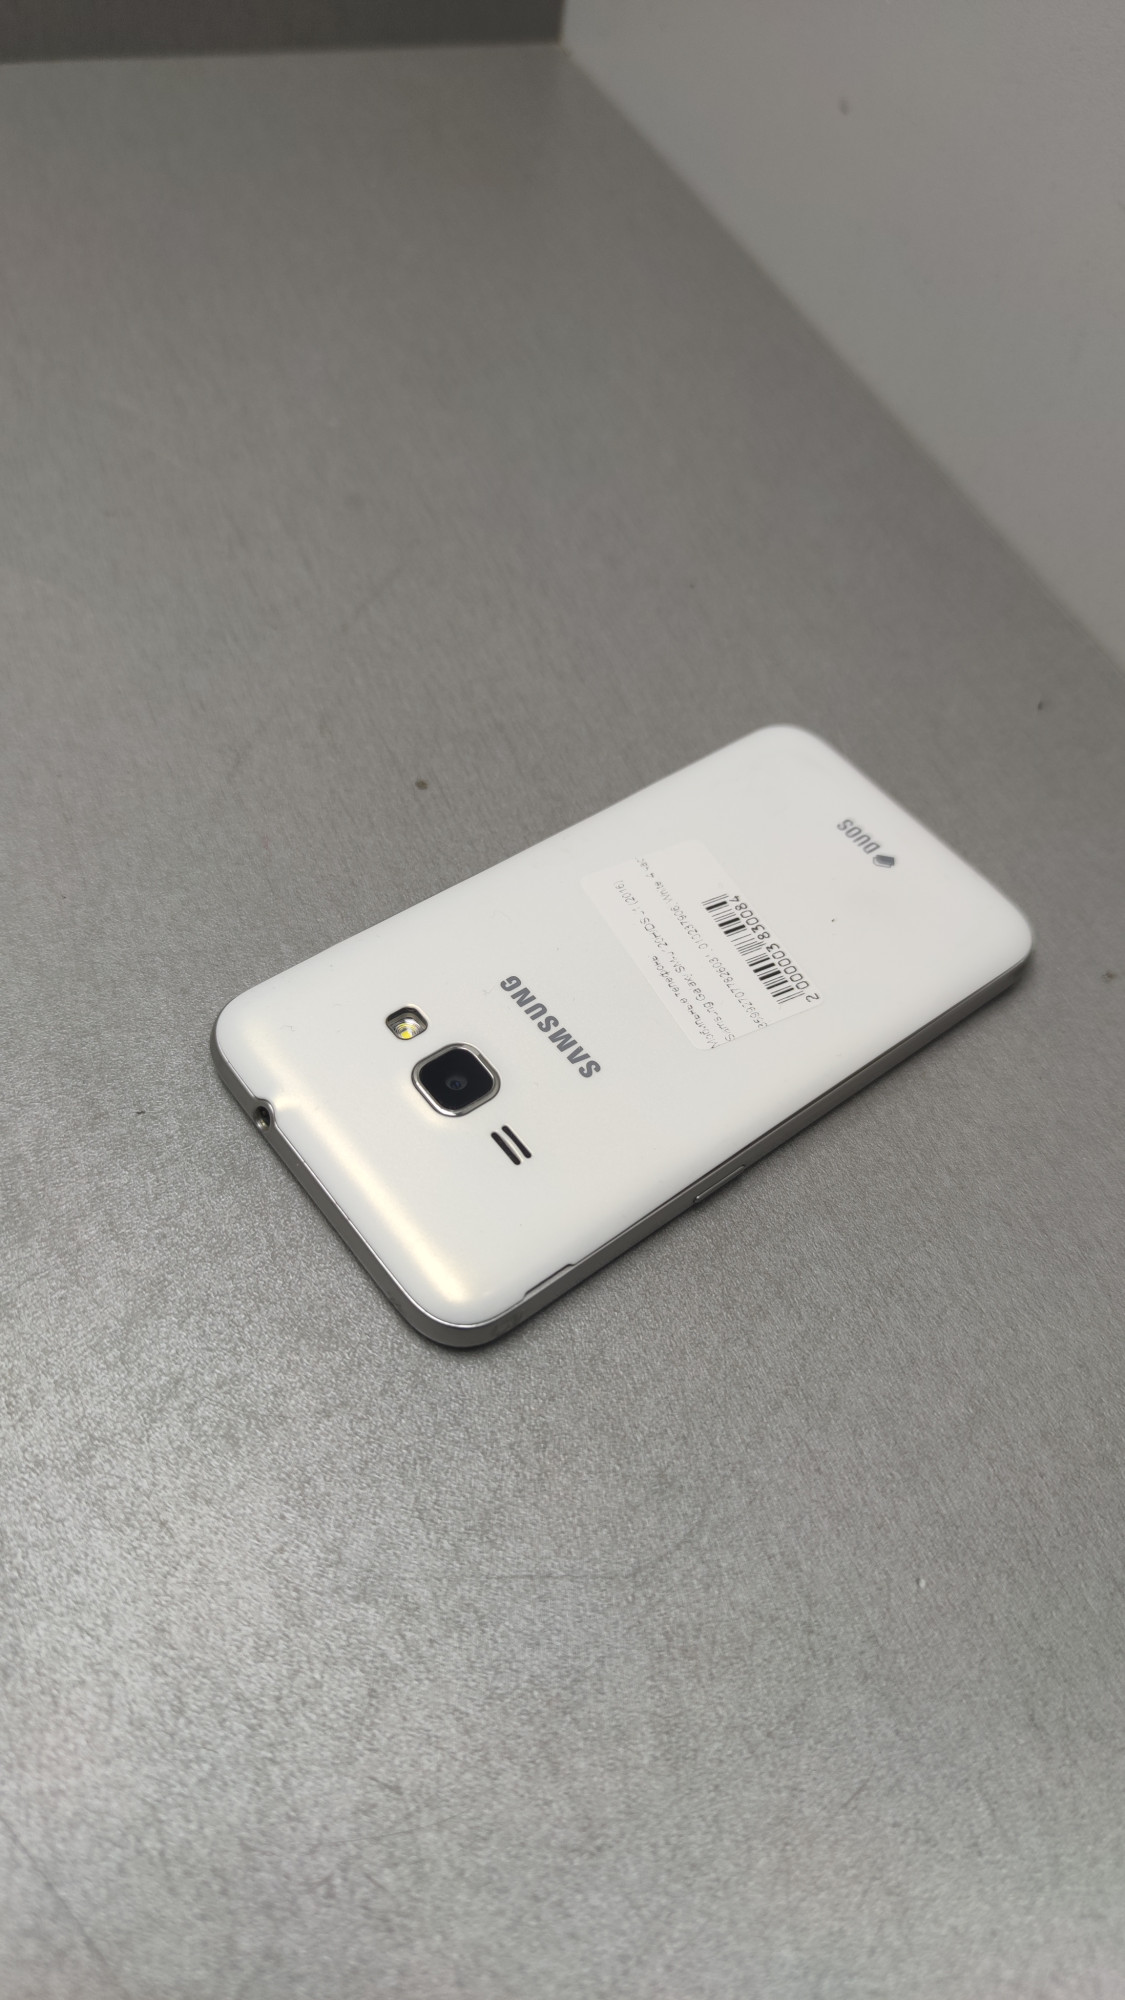 Samsung Galaxy J1 (SM-J120H) 1/8Gb 8